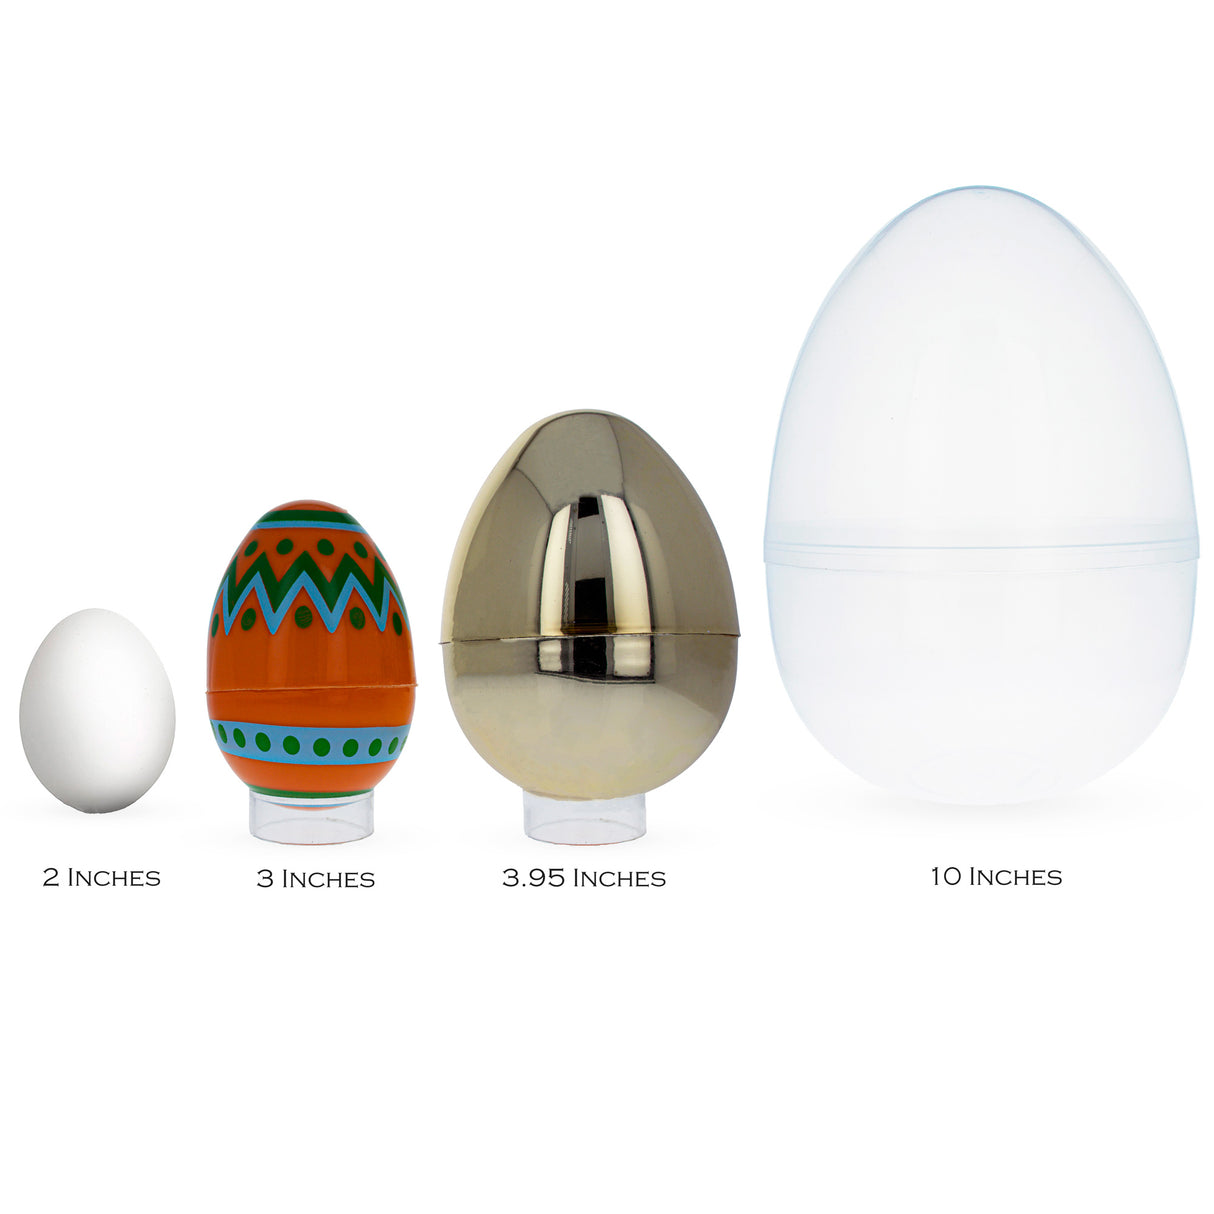 Vibrant Tradition: Set of 12 Large Ukrainian Geometric Pysanky Plastic Easter Eggs 3 Inches